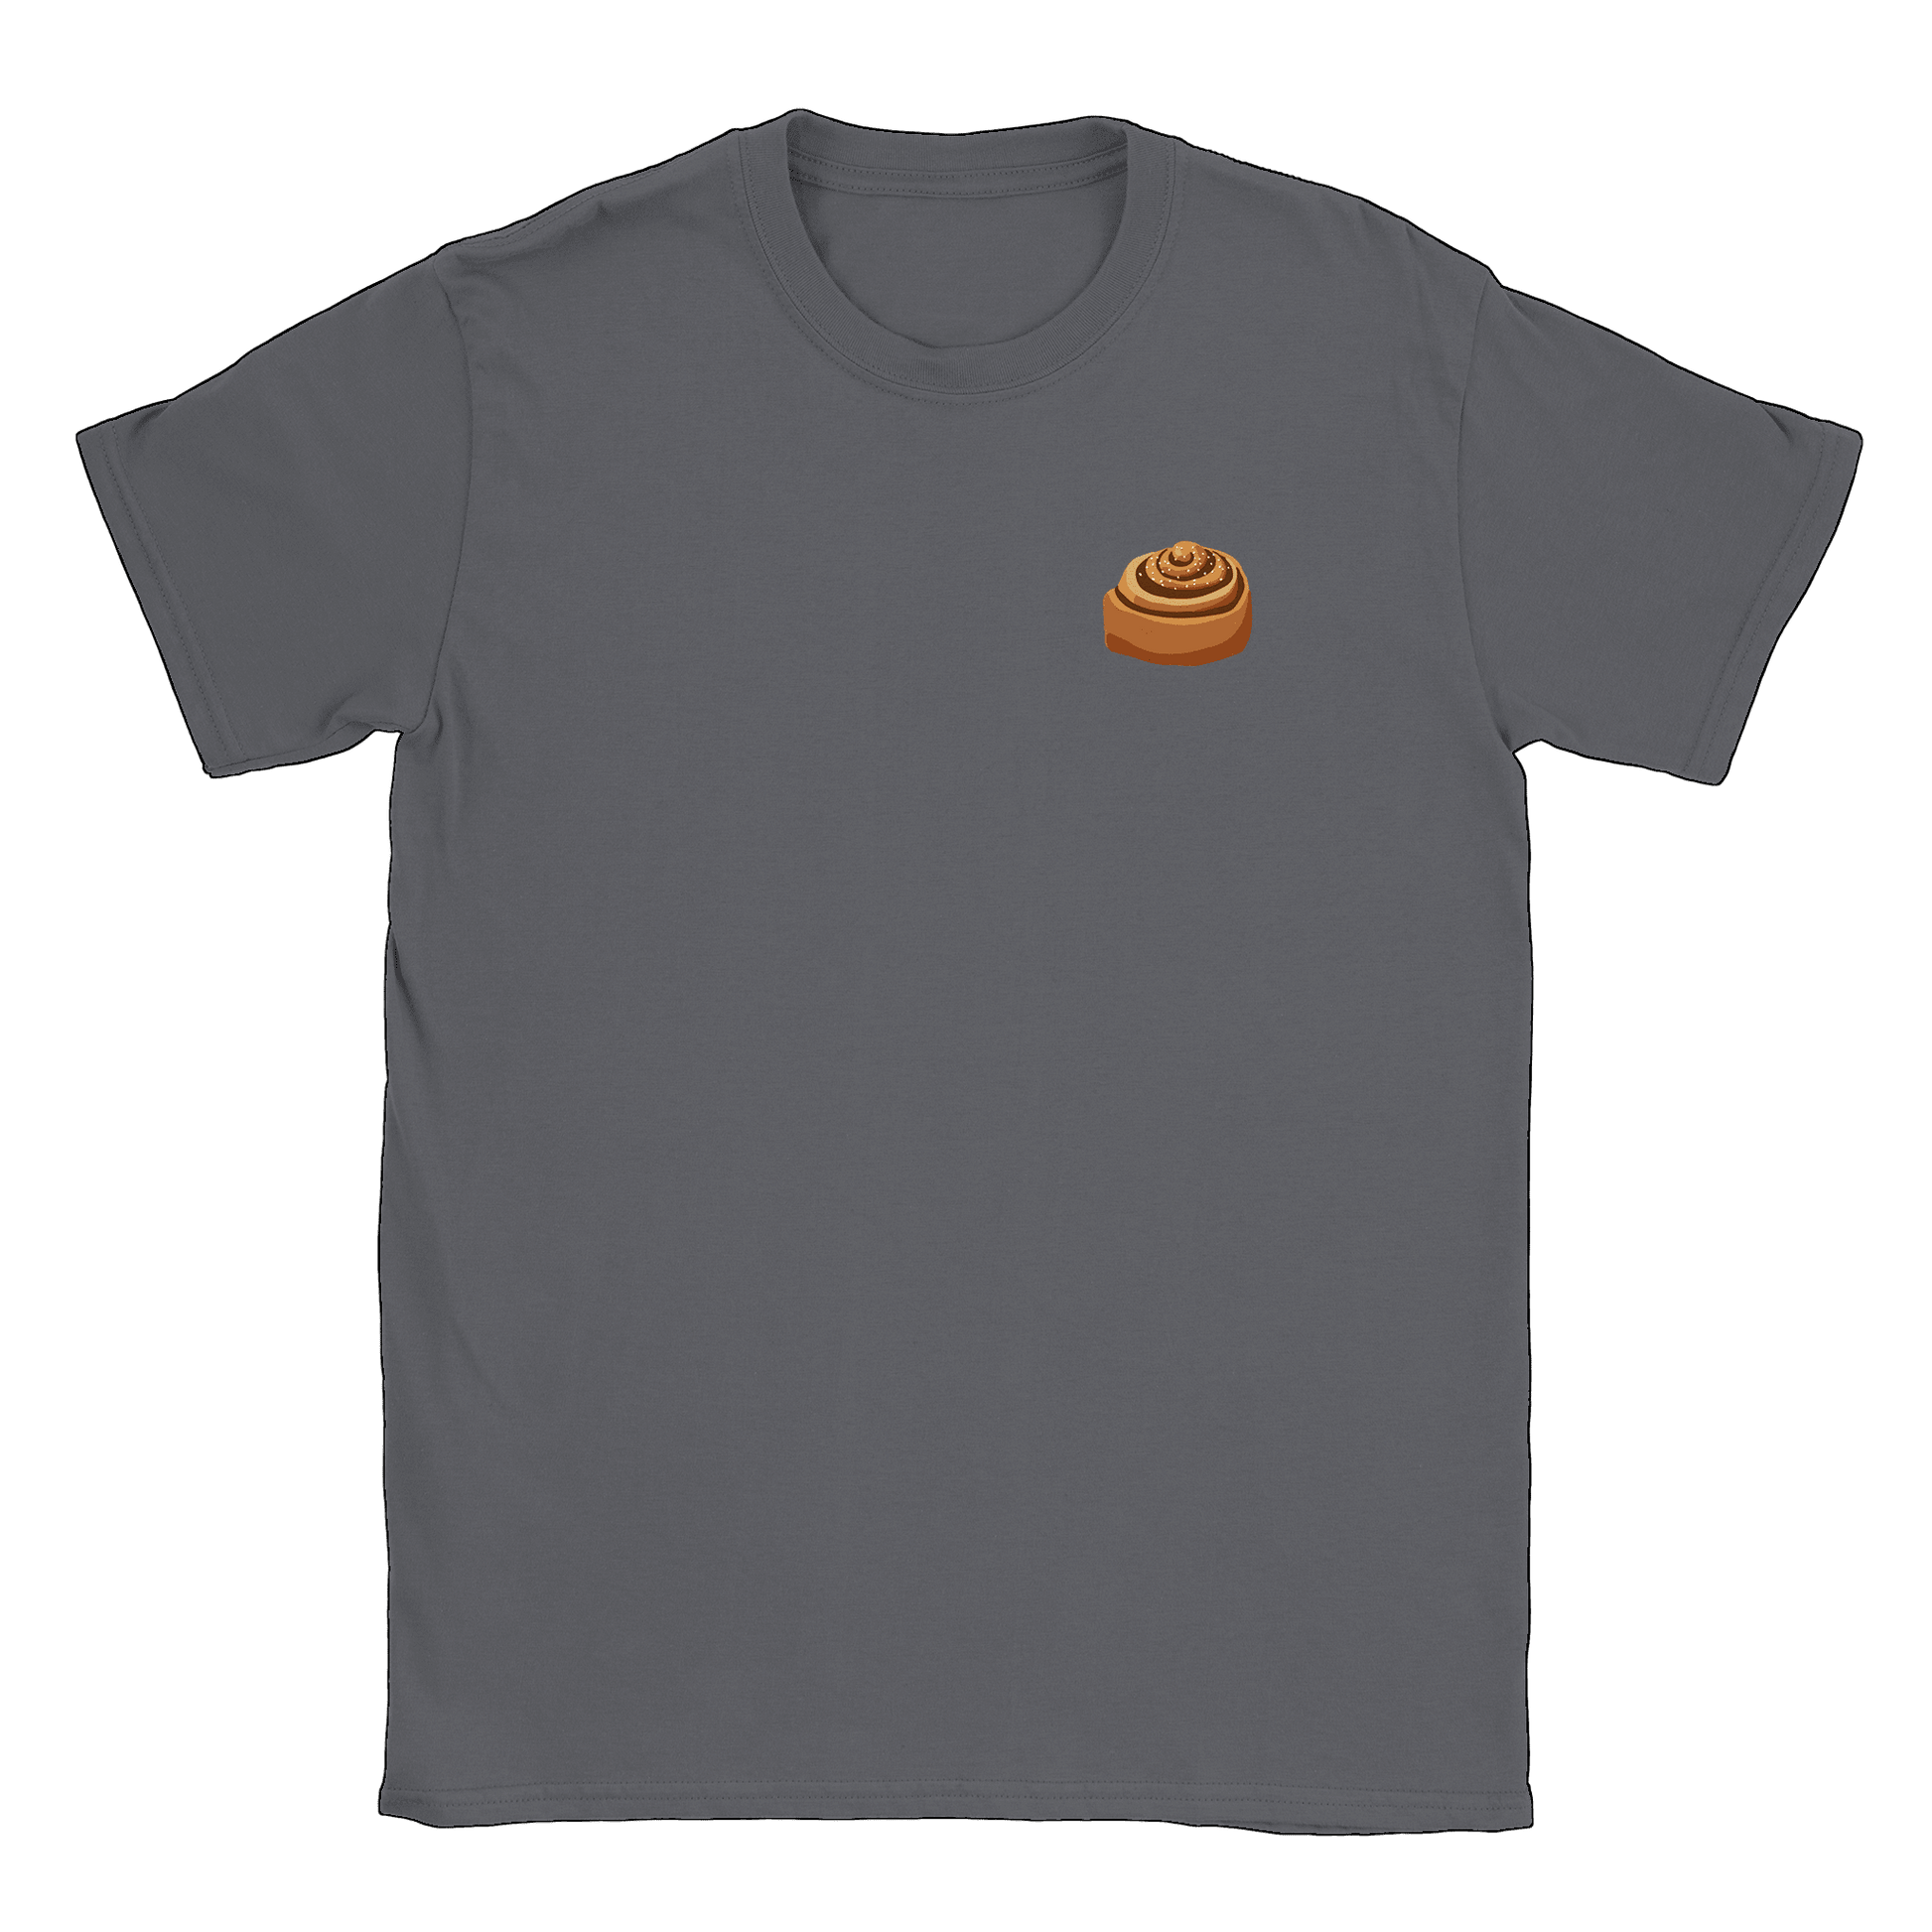 Kanelbulle Liten - T-shirt Charcoal